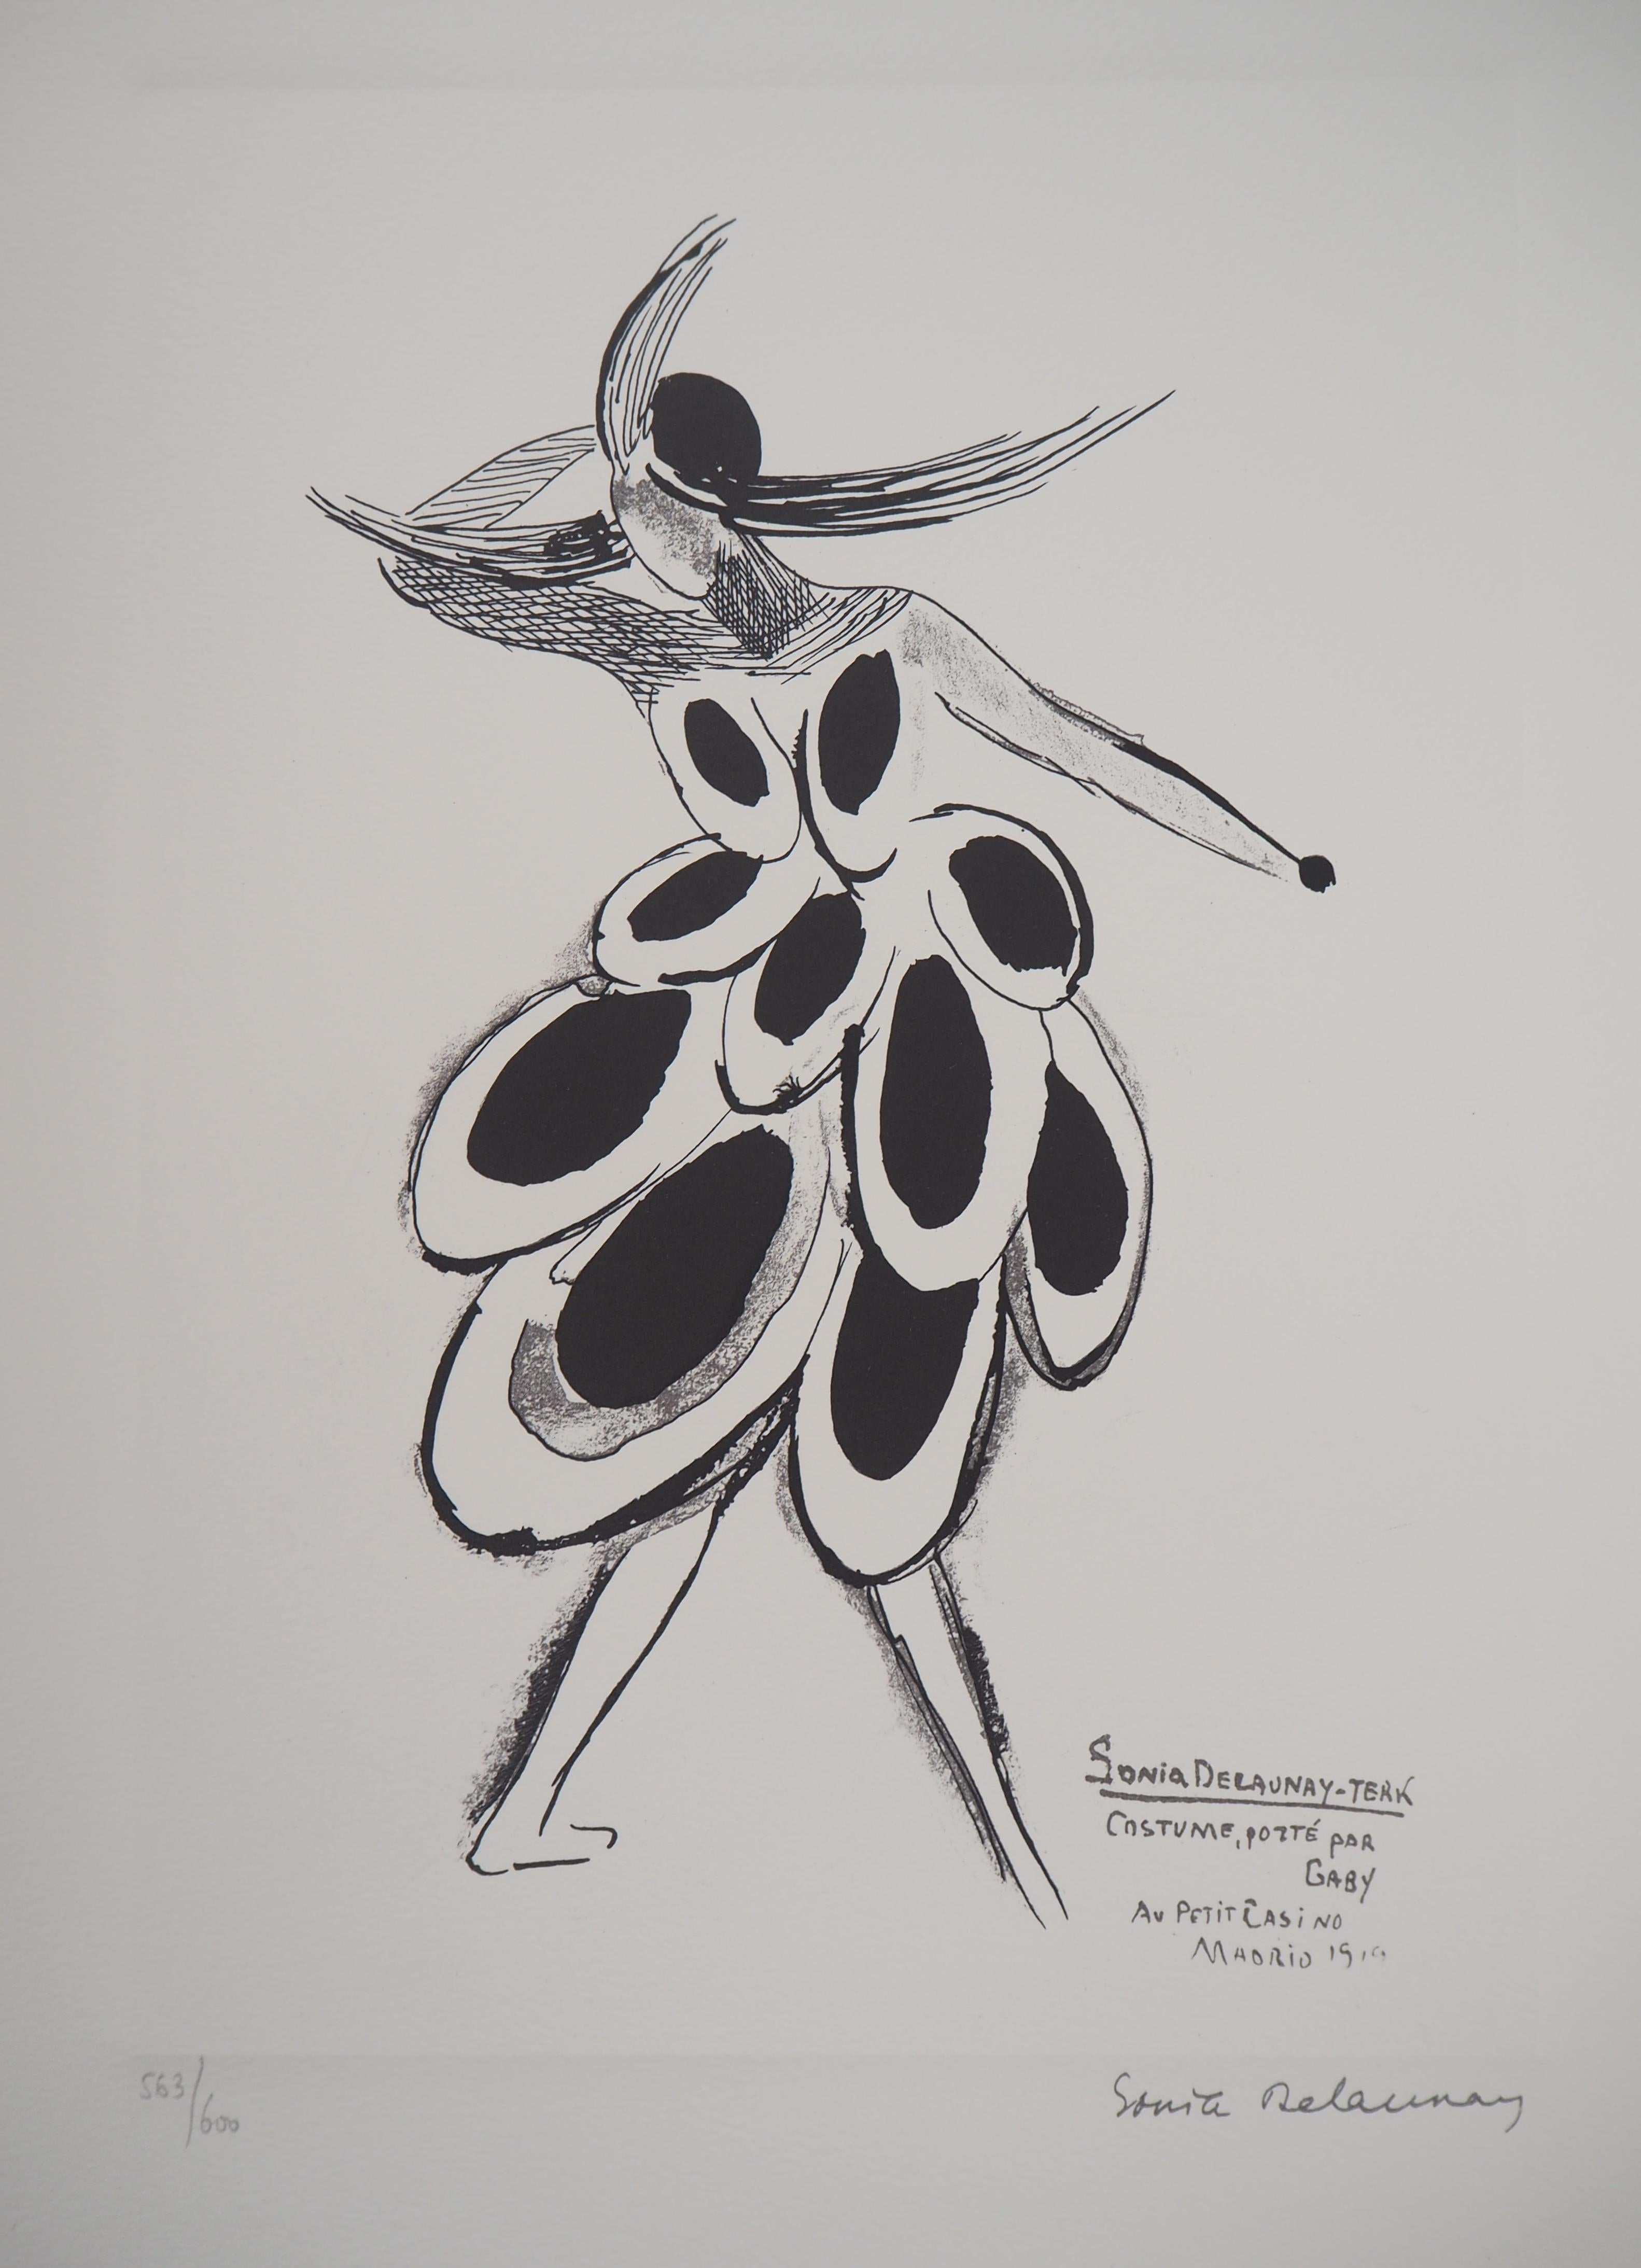 Sonia Delaunay Abstract Print - Spain : Flamenco Dancer - Lithograph (Artcurial edition)